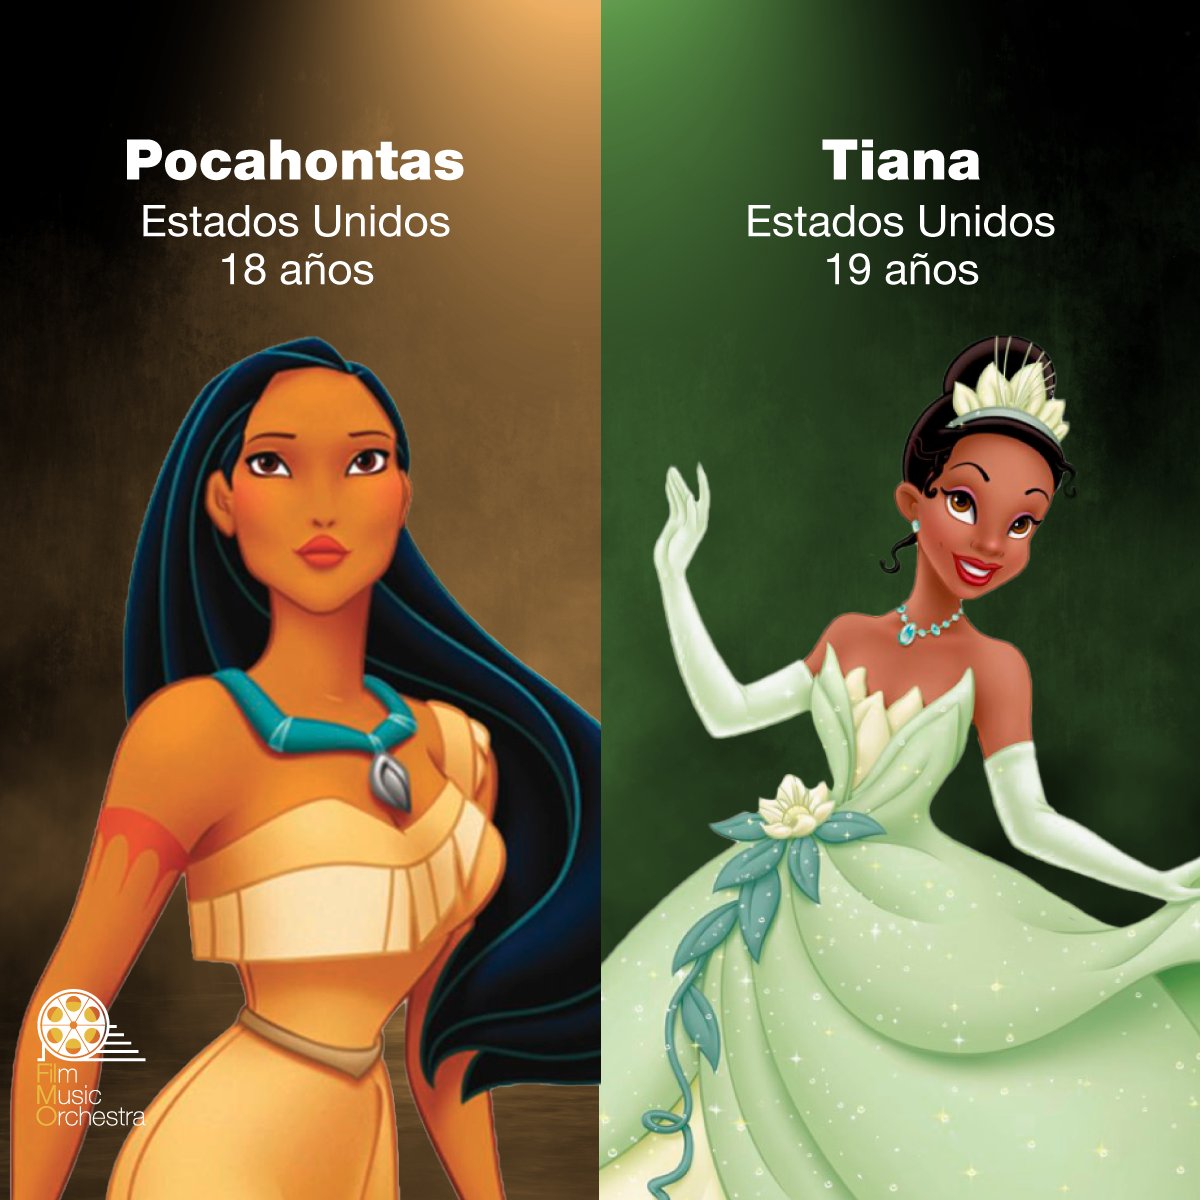 😜Las mejores curiosidades sobre princesas, parte 2.🎞️❤️
 . 
. 
. 
.
 #film #cinema #actor #love #hollywood #movies #art #music #cine #bogotá #colombia #orchestra #filmmusicorchestra #soundtrack #princesas #princesasdisney #rapunzel #Mulan #merida #elsa #princesasana #moana